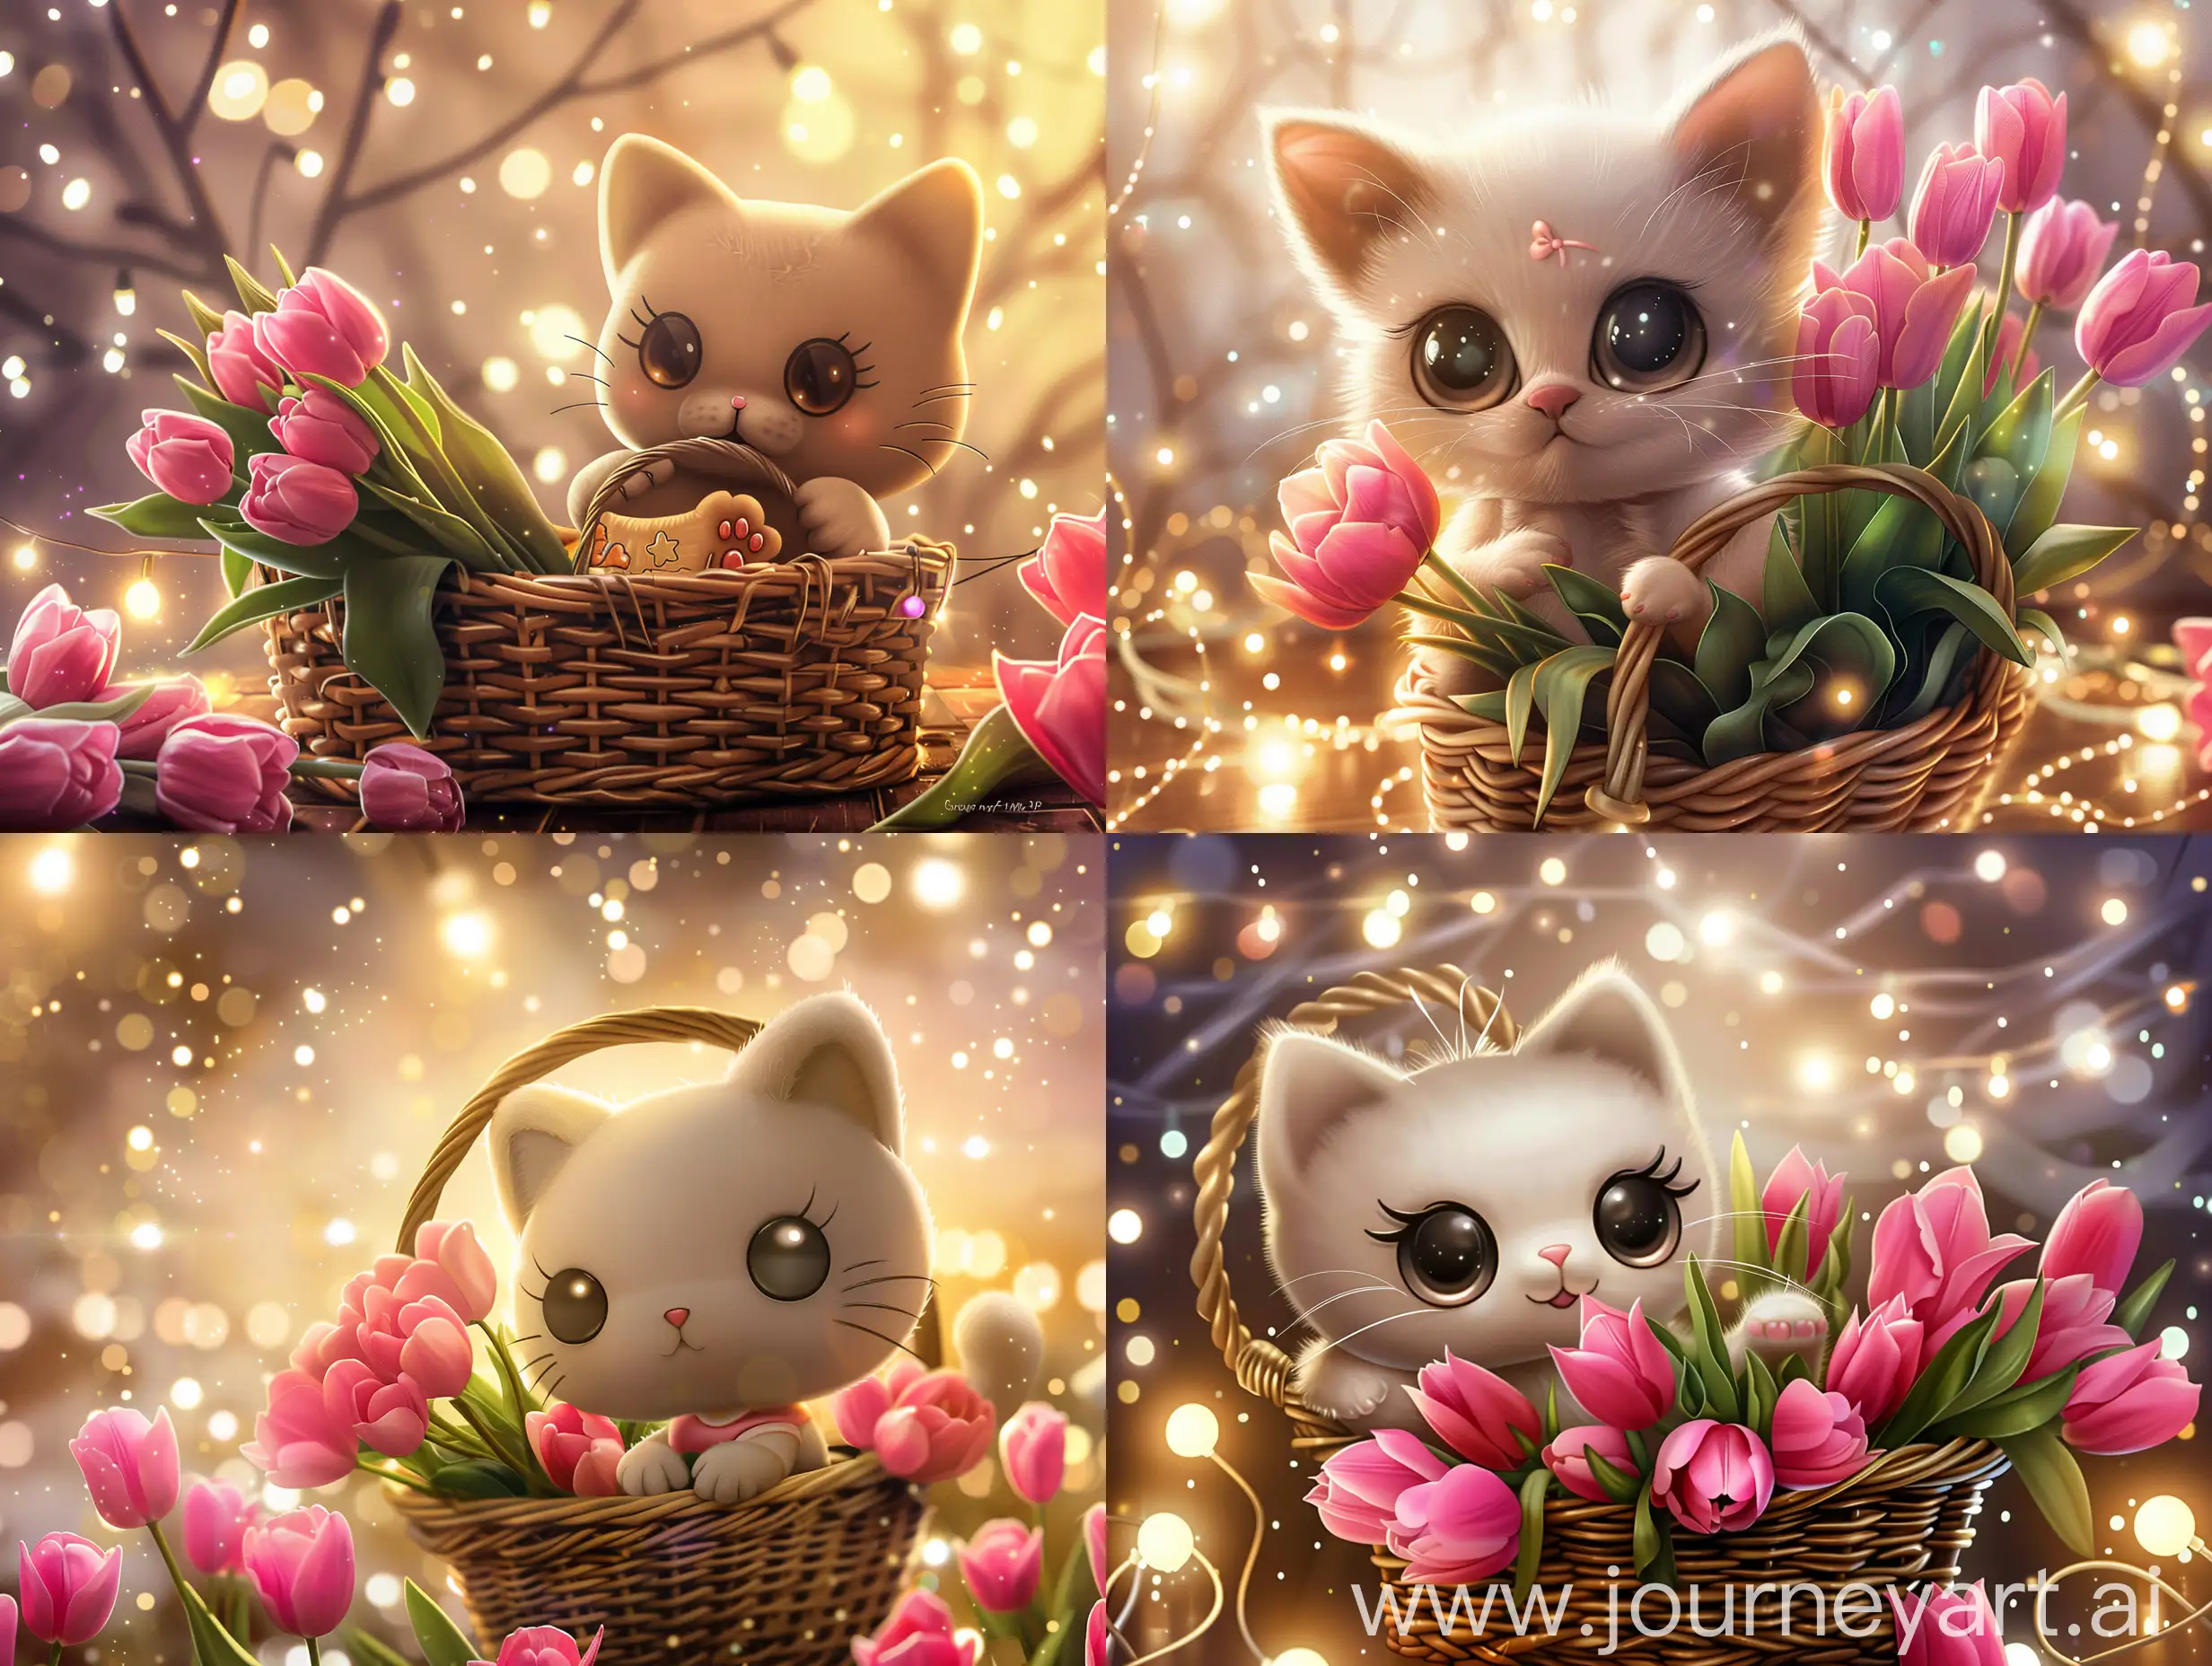 Adorable-Hello-Kitty-in-a-Fantasy-Tulip-Wonderland